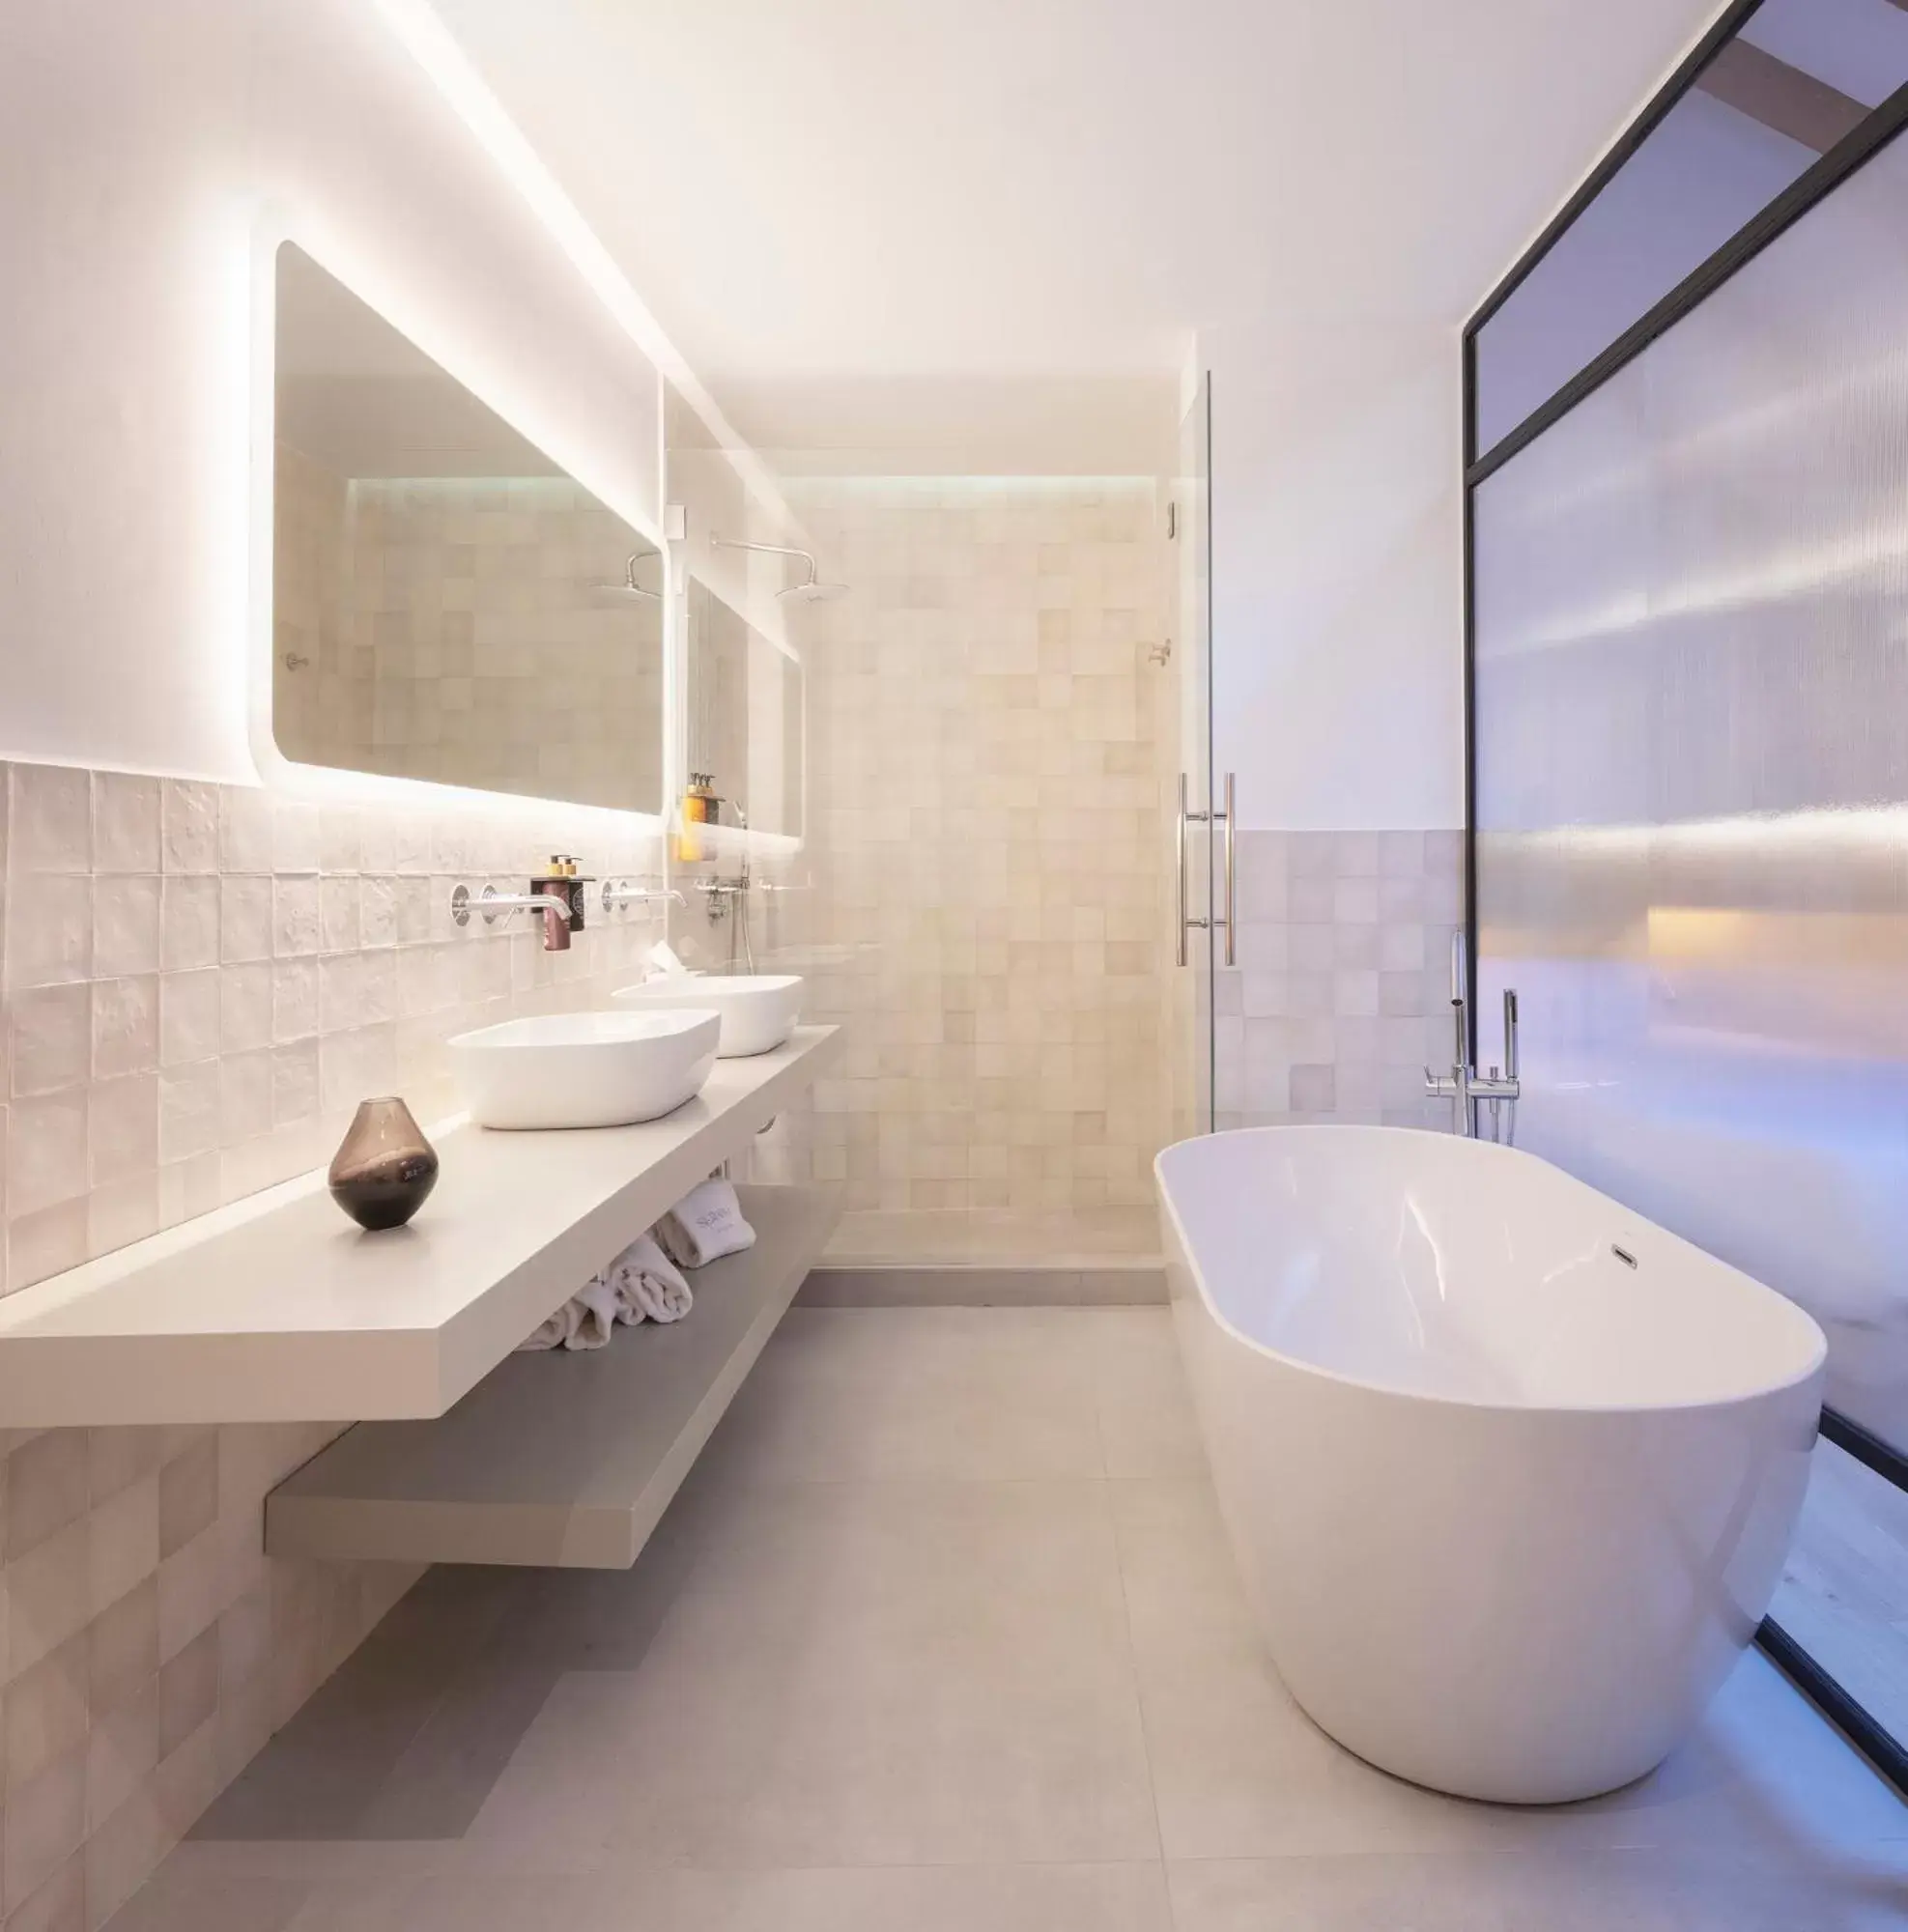 Bathroom in Hotel Serawa Alicante